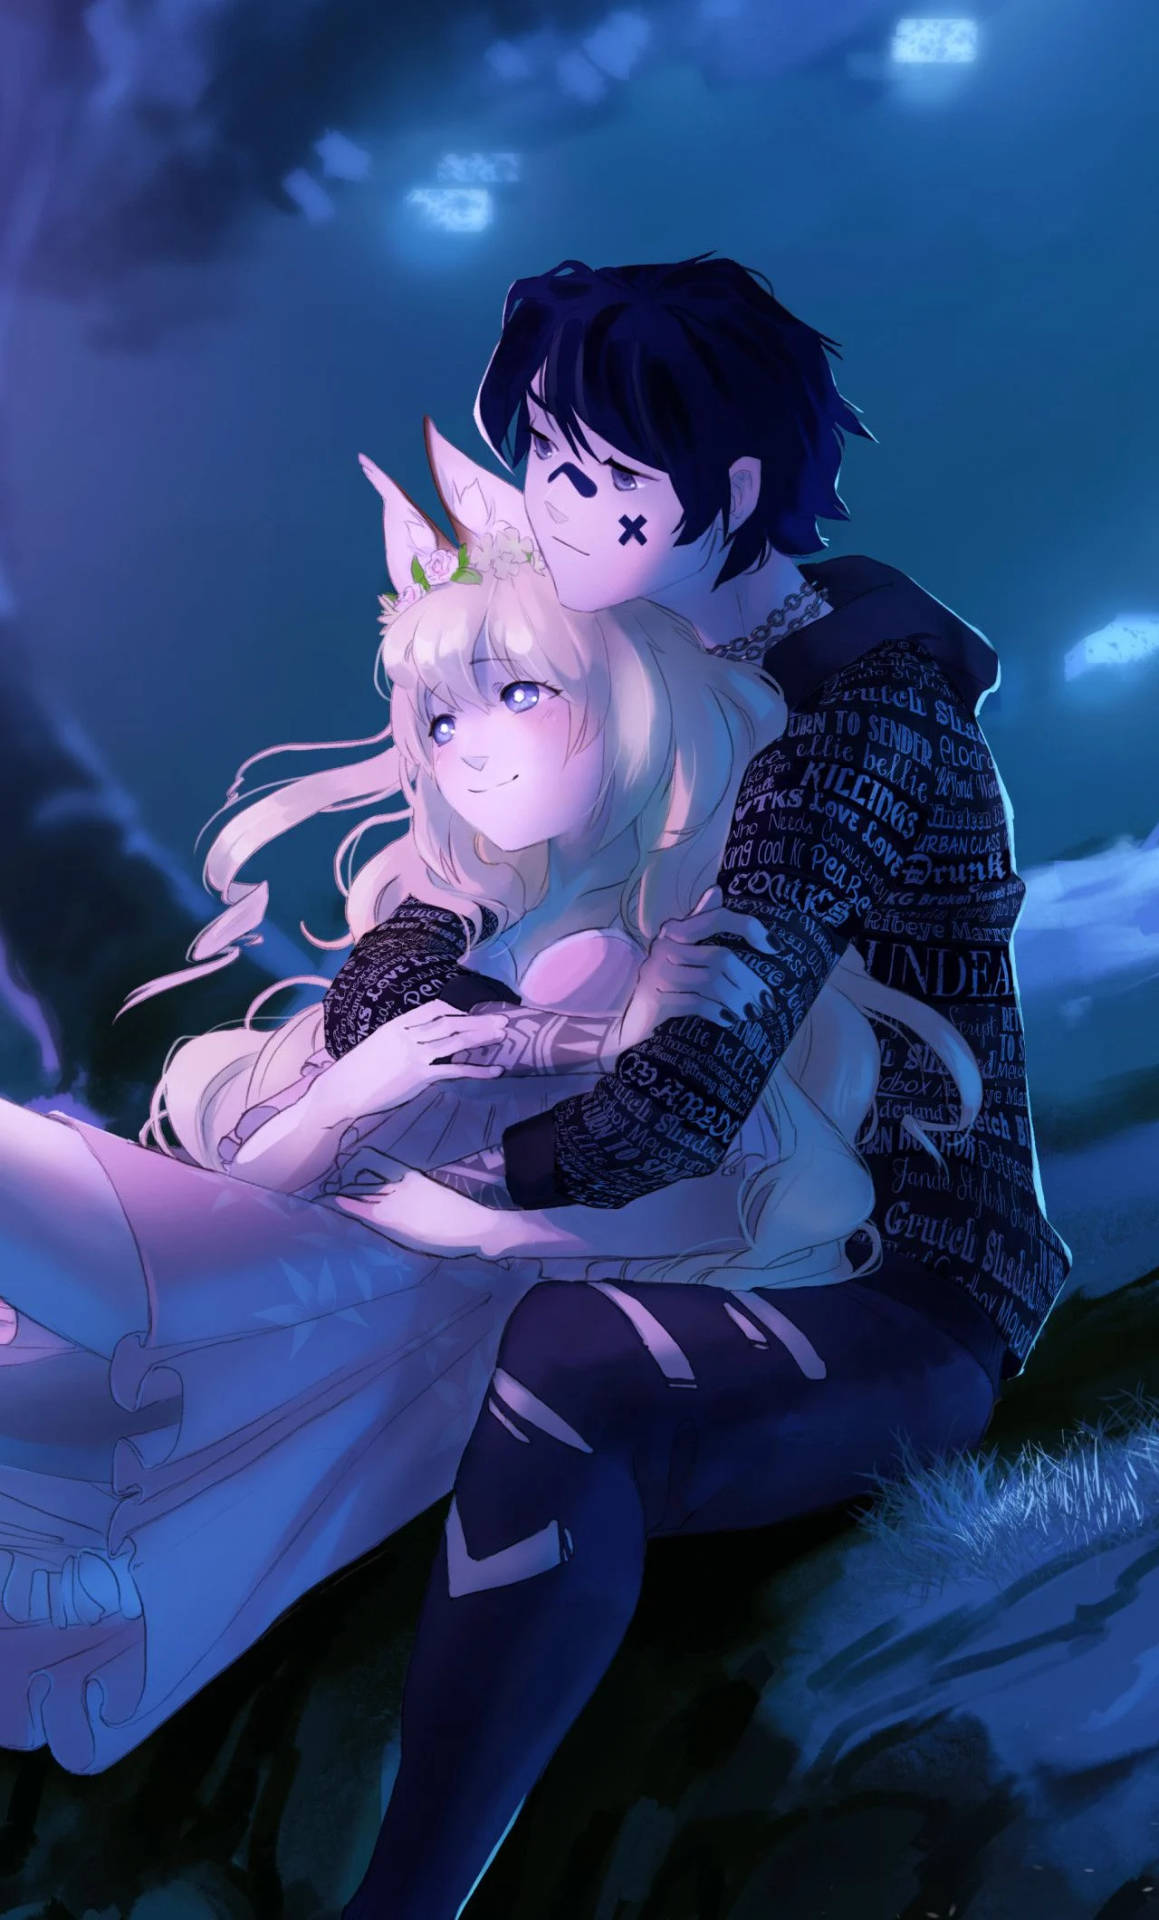 Anime Hug Under Night Sky